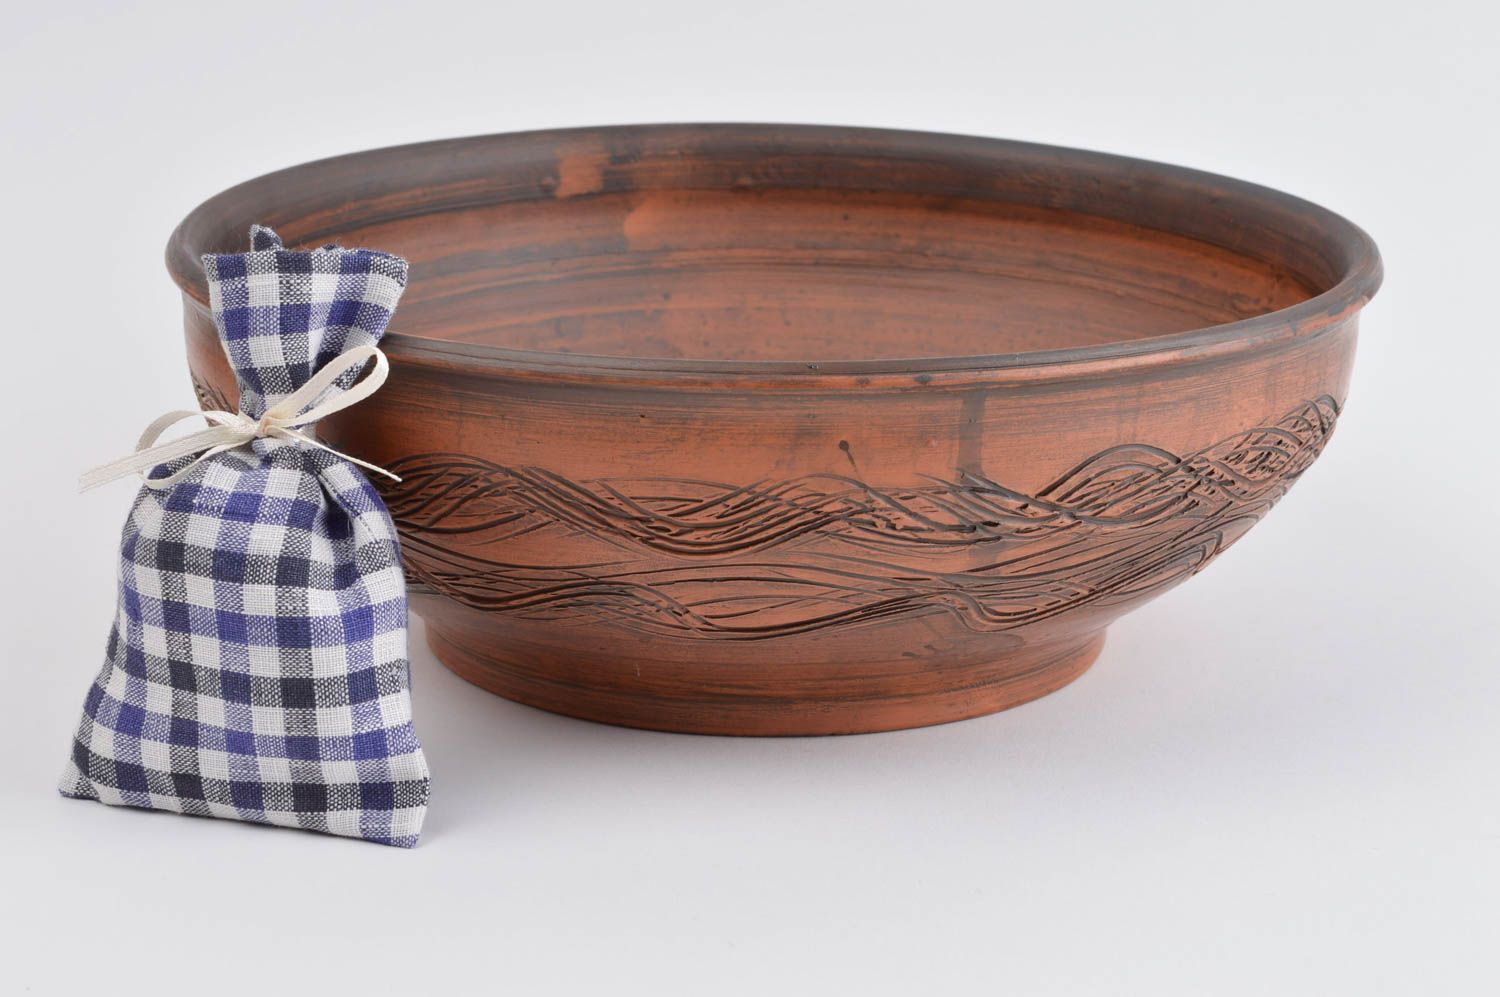 Beautiful handmade ceramic bowl salad bowl designs home ceramics gift ideas photo 1